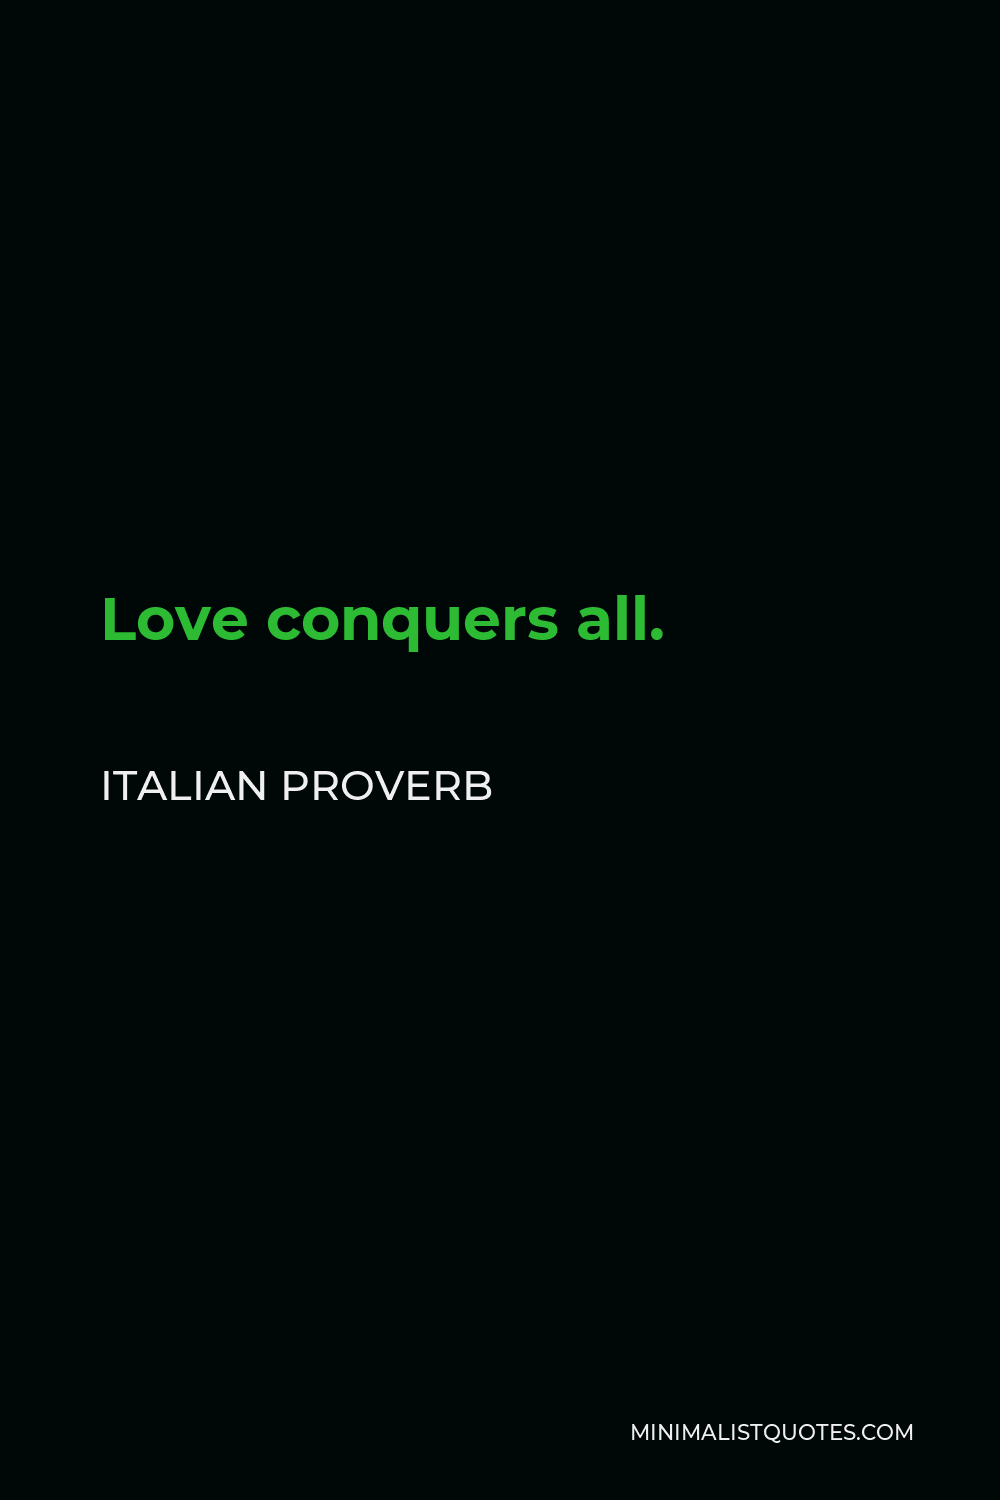 Italian Proverb Quote - Love conquers all.